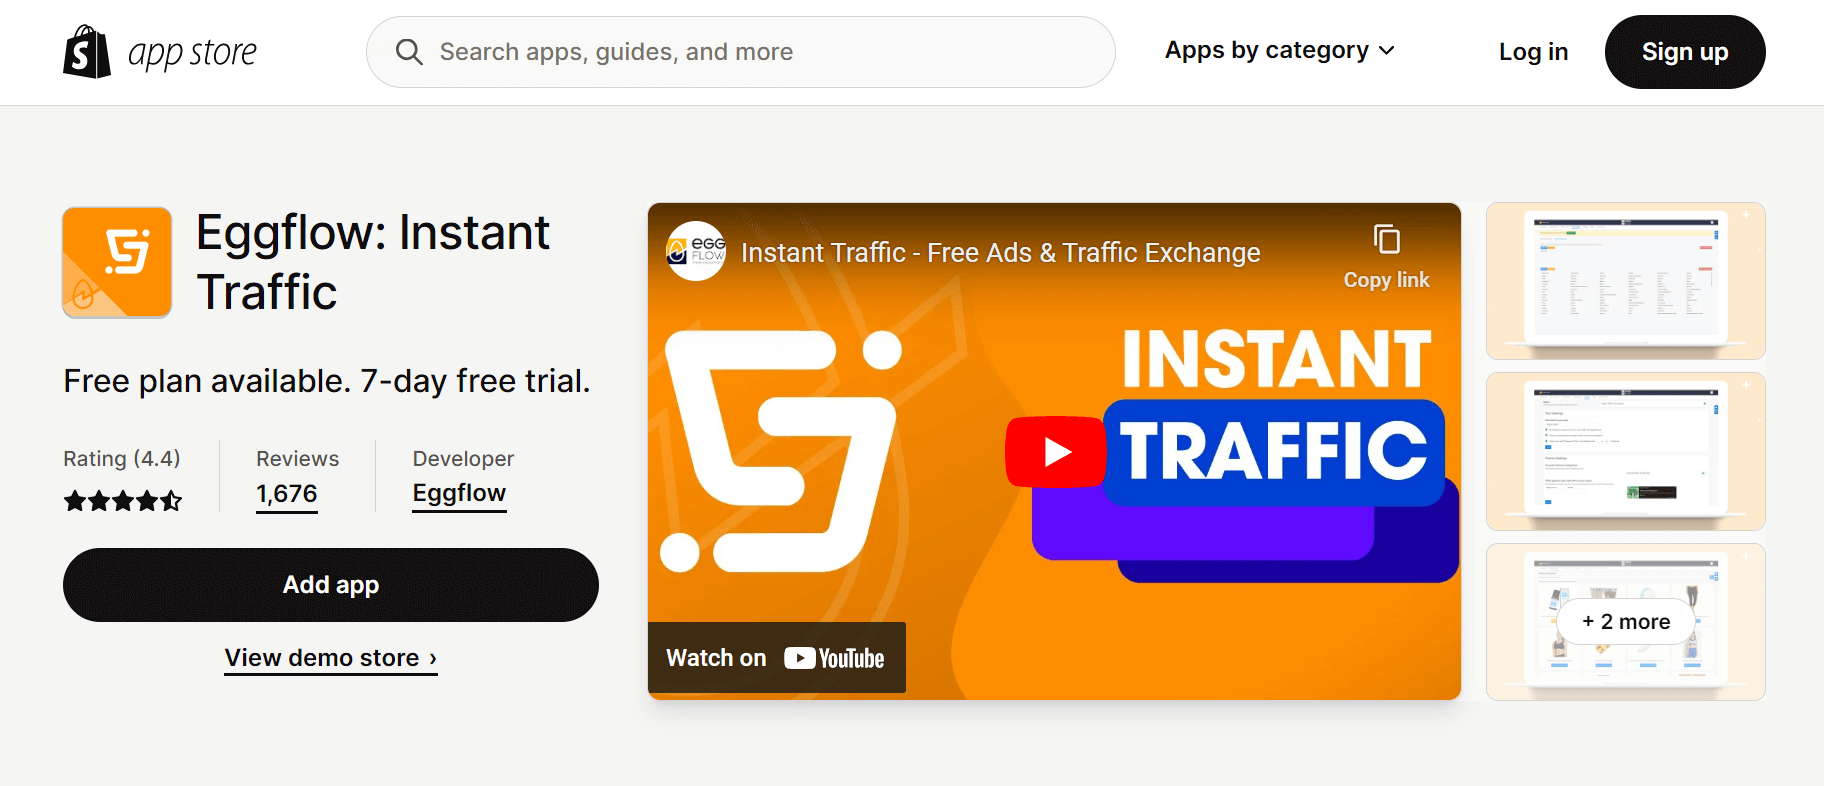 Shopify Affiliate App - Eggflow: Instant Traffic